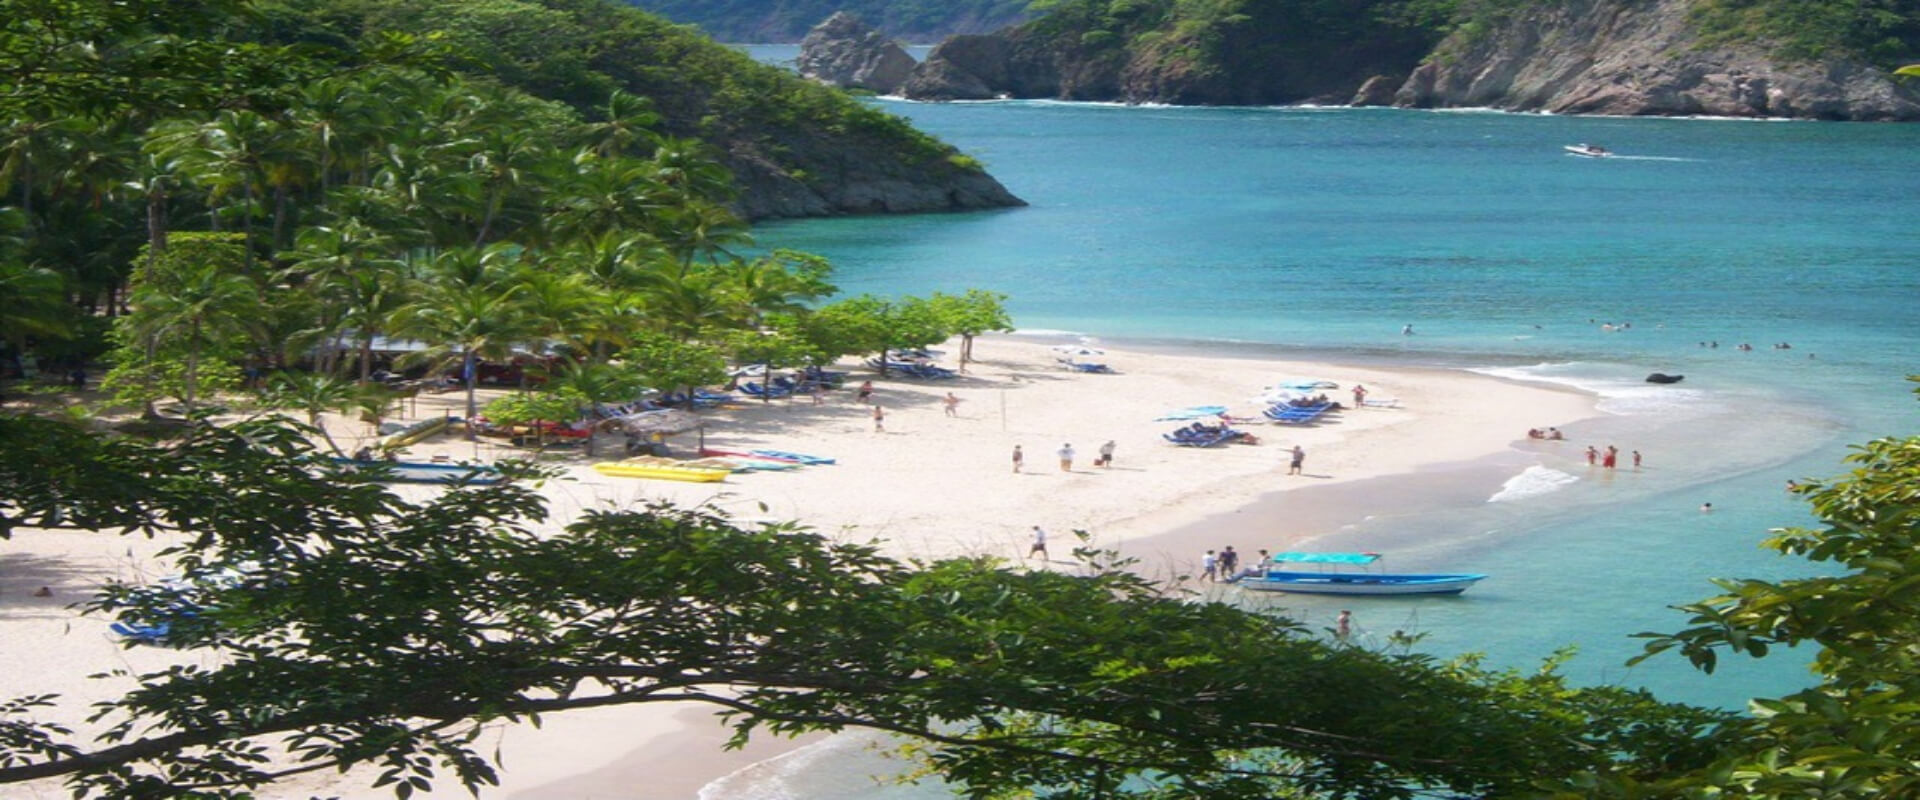 Tortuga Island Tour | Costa Rica Jade Tours